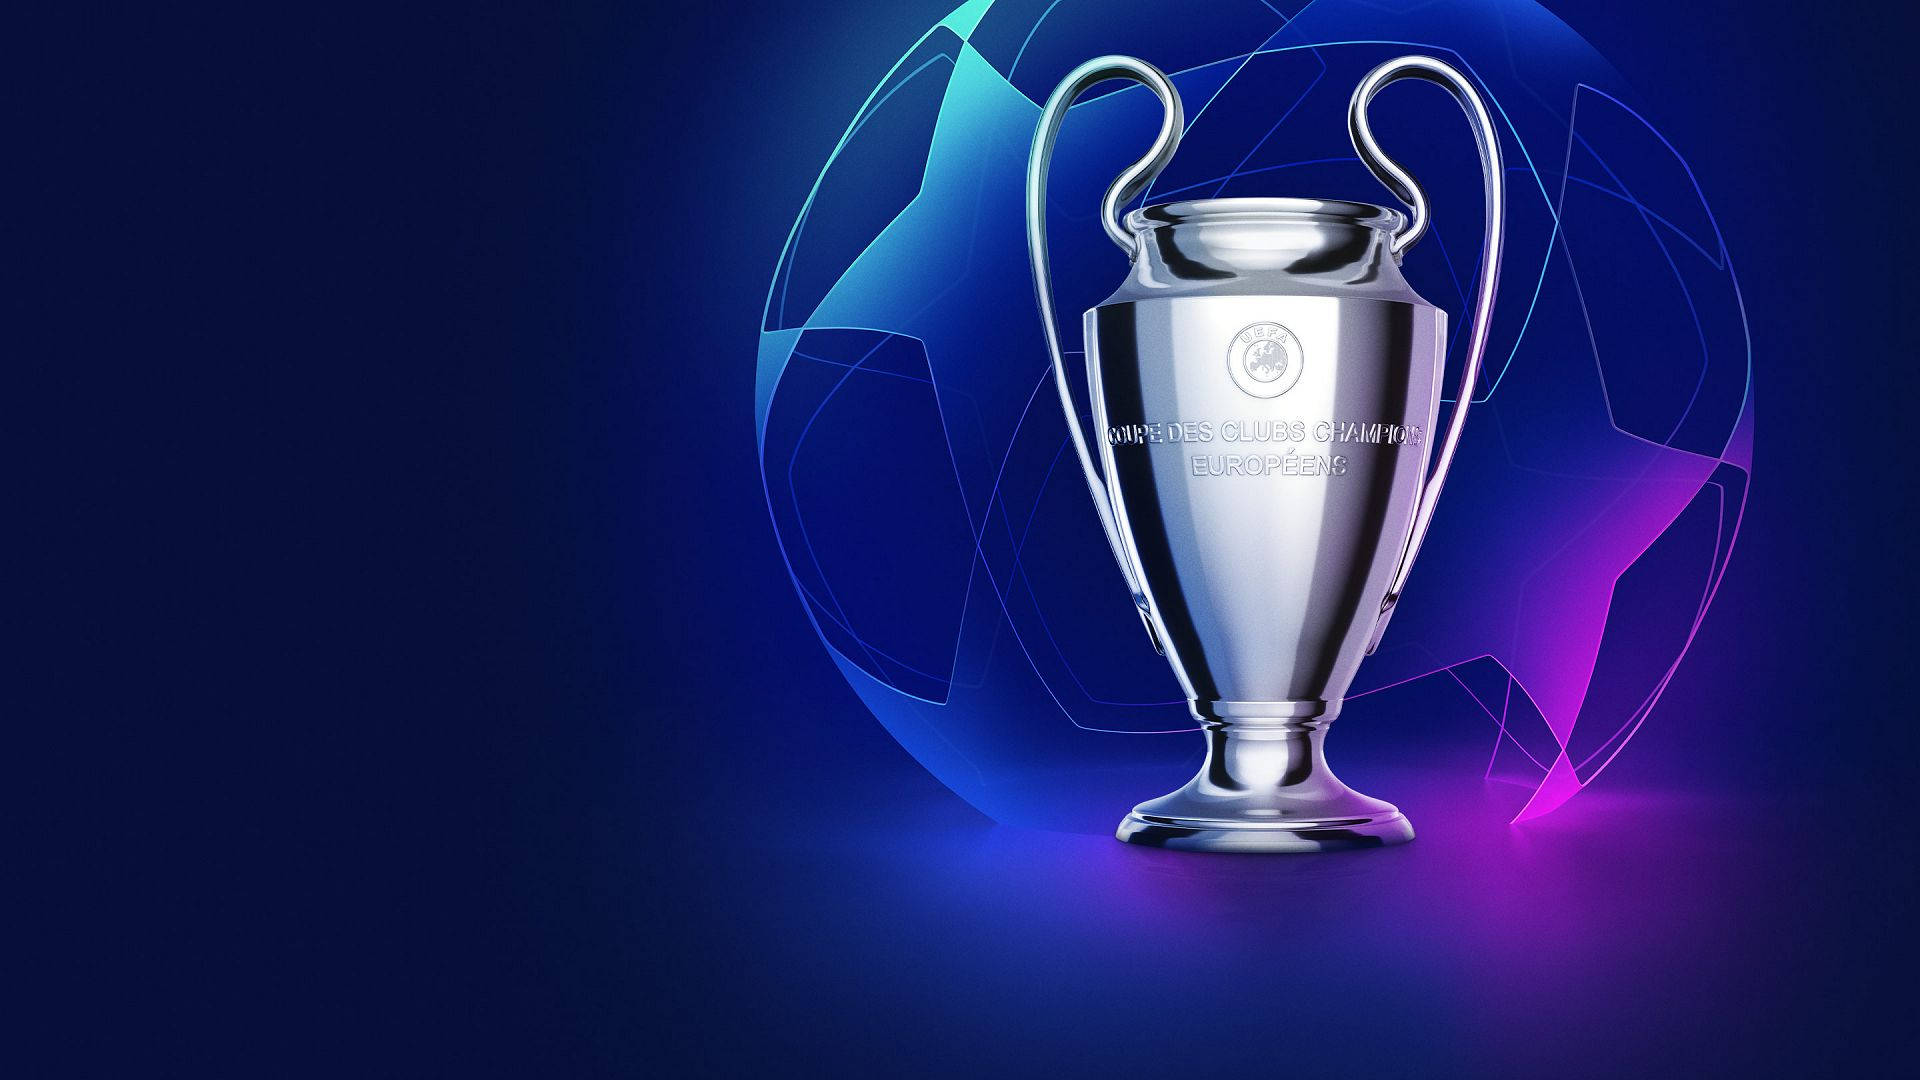 UEFA Champions League Football Club Trophy Wallpaper